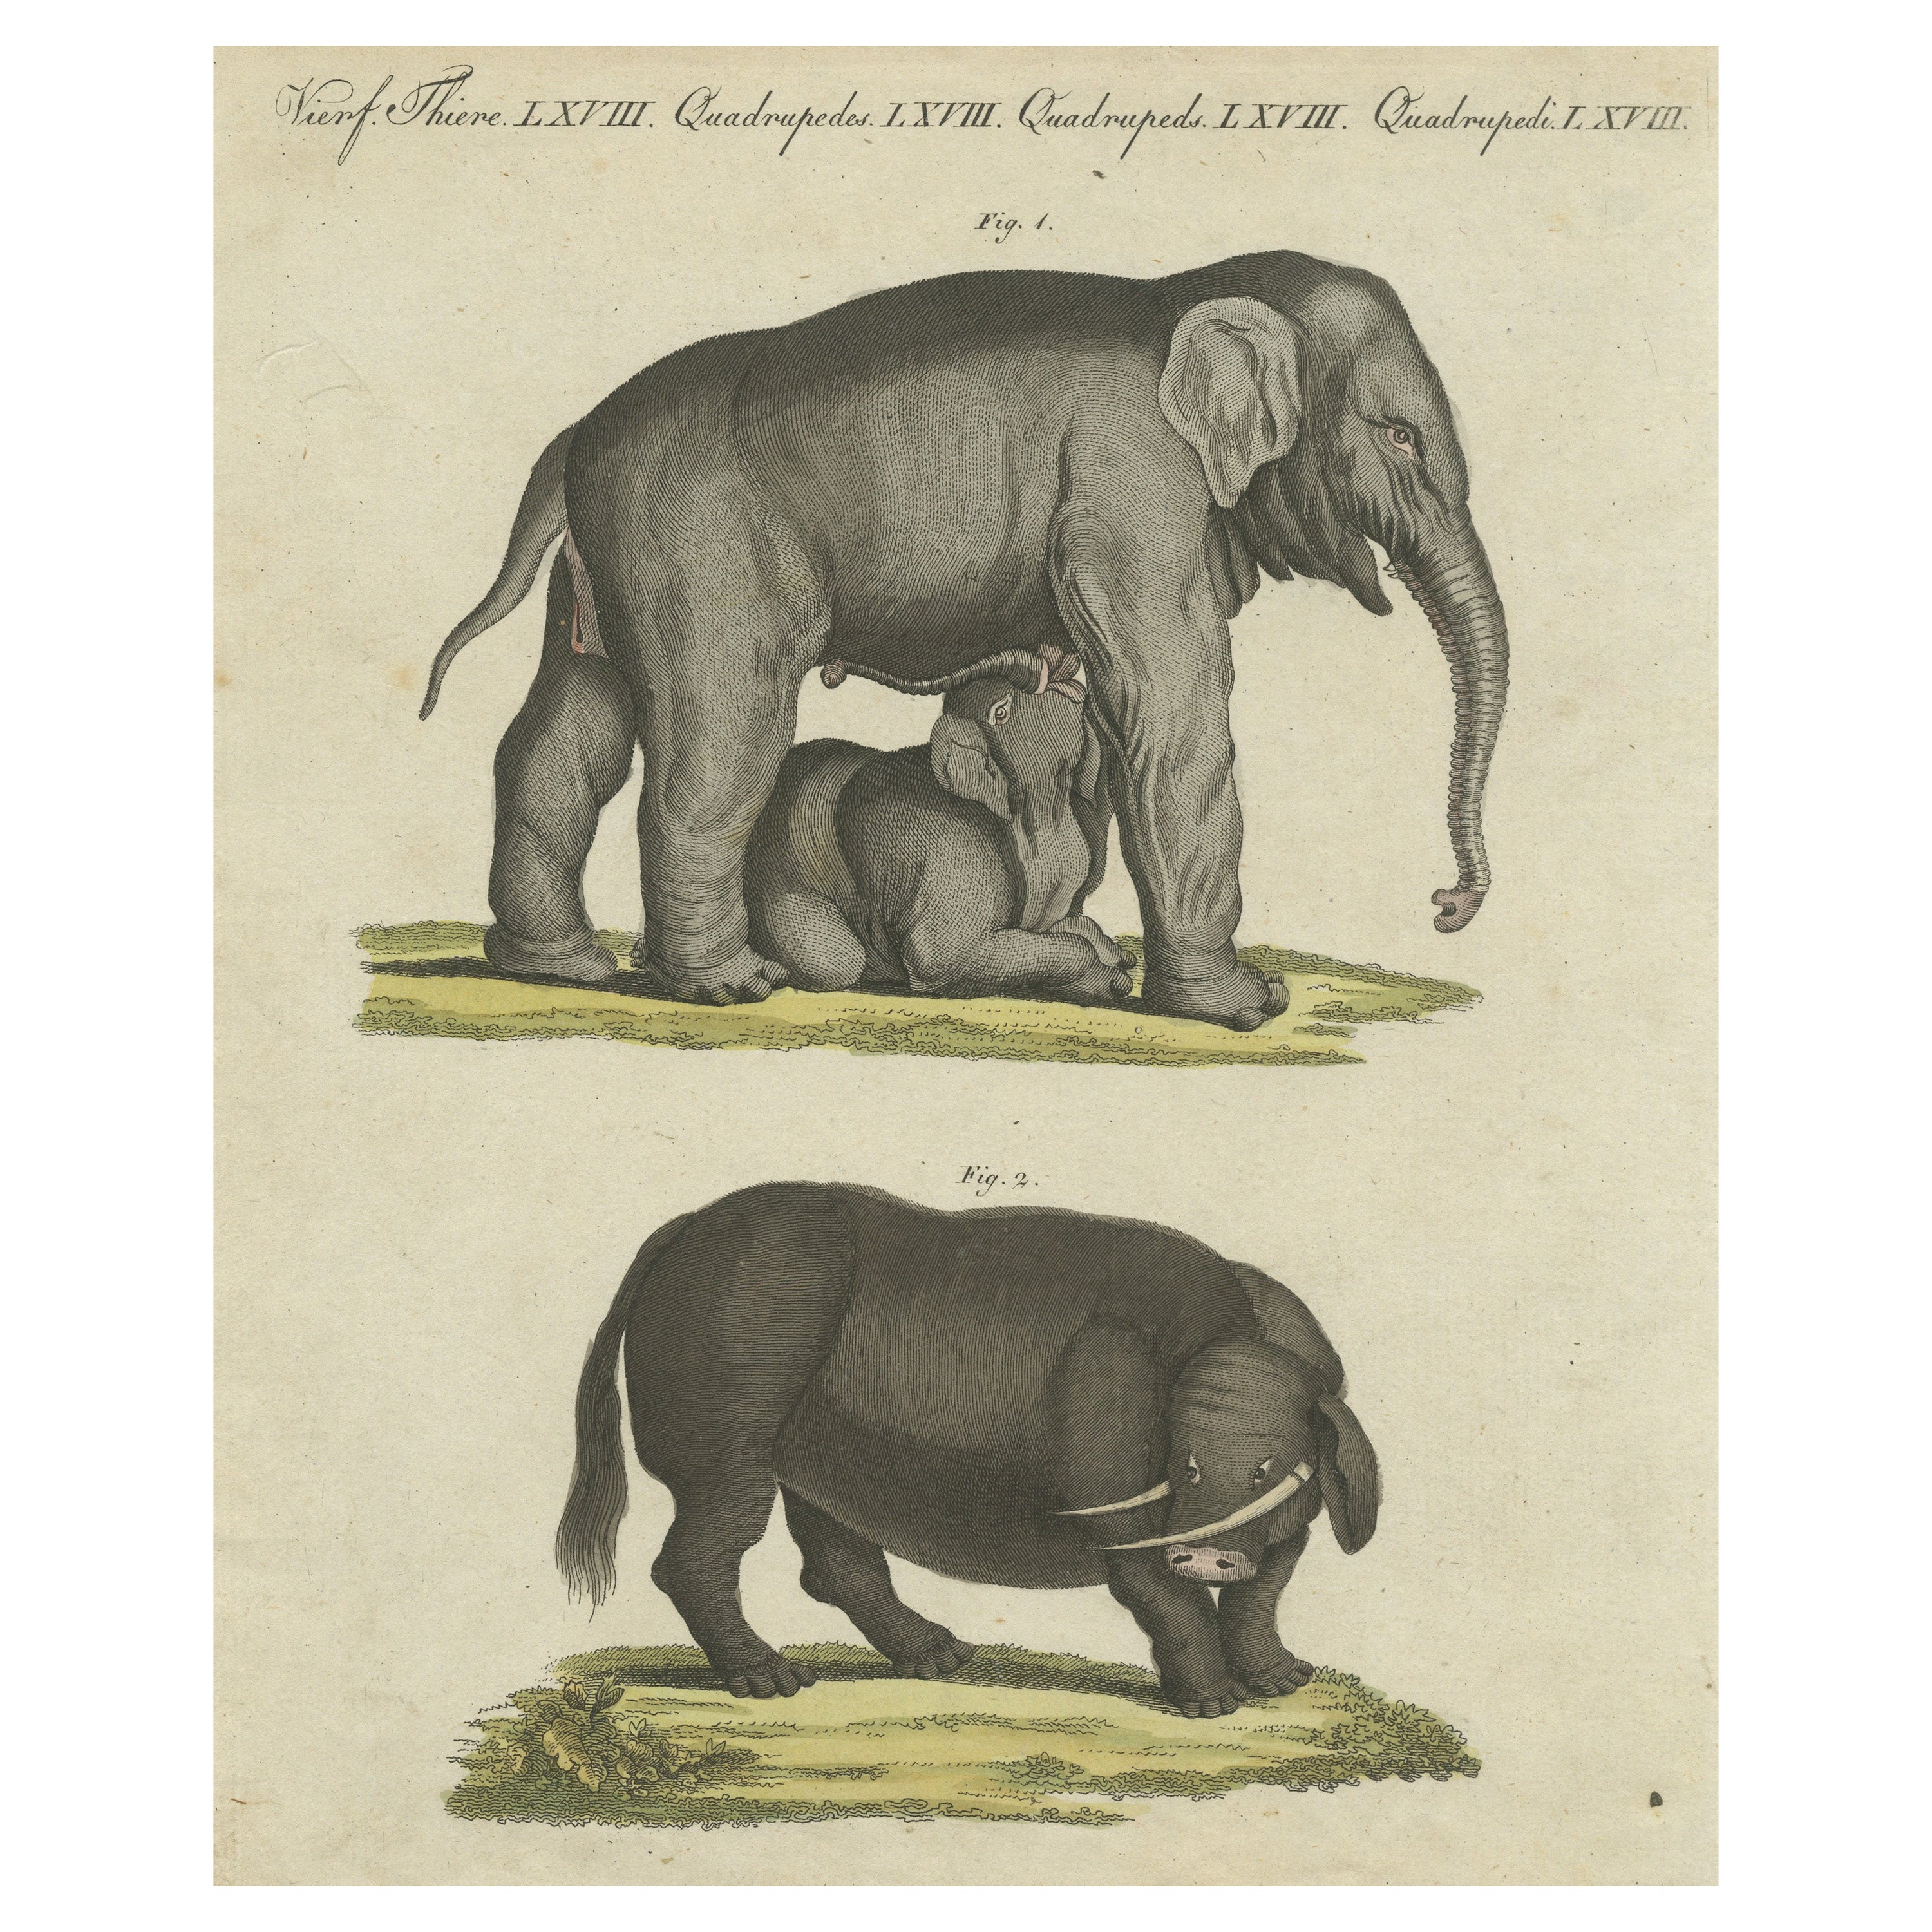 Original Antique Print of the Indian Elephant and the Mythical Beast Sukotyro